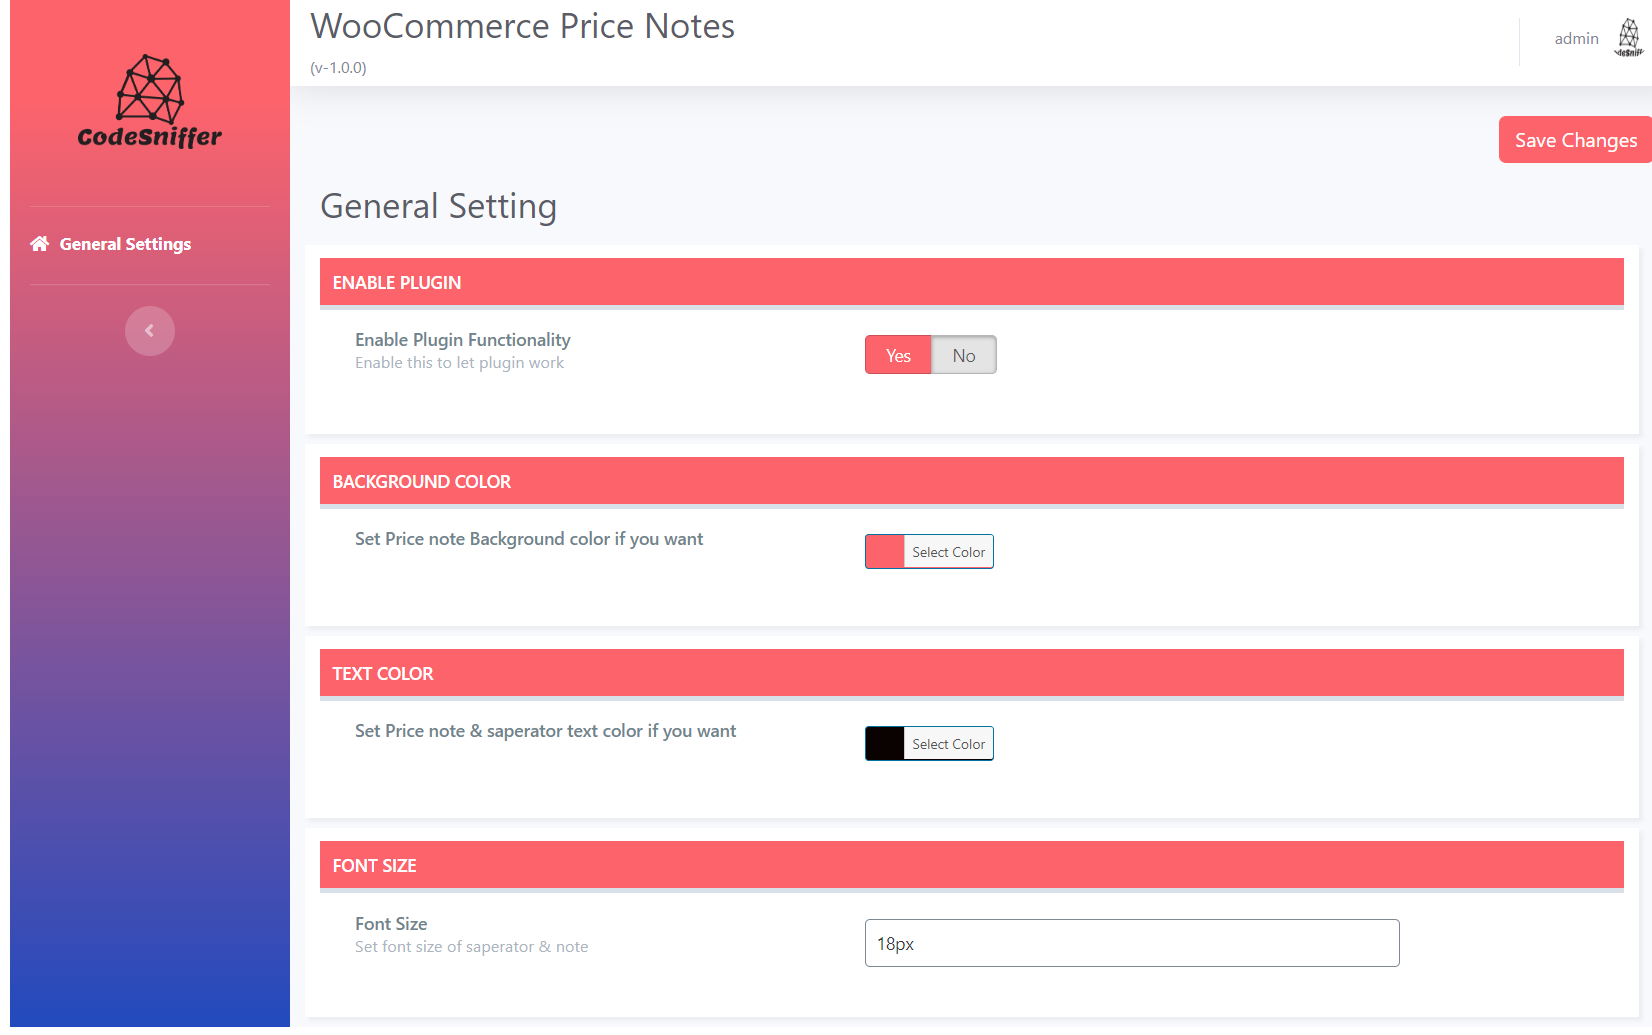 WooCommerce Price Note Plugin